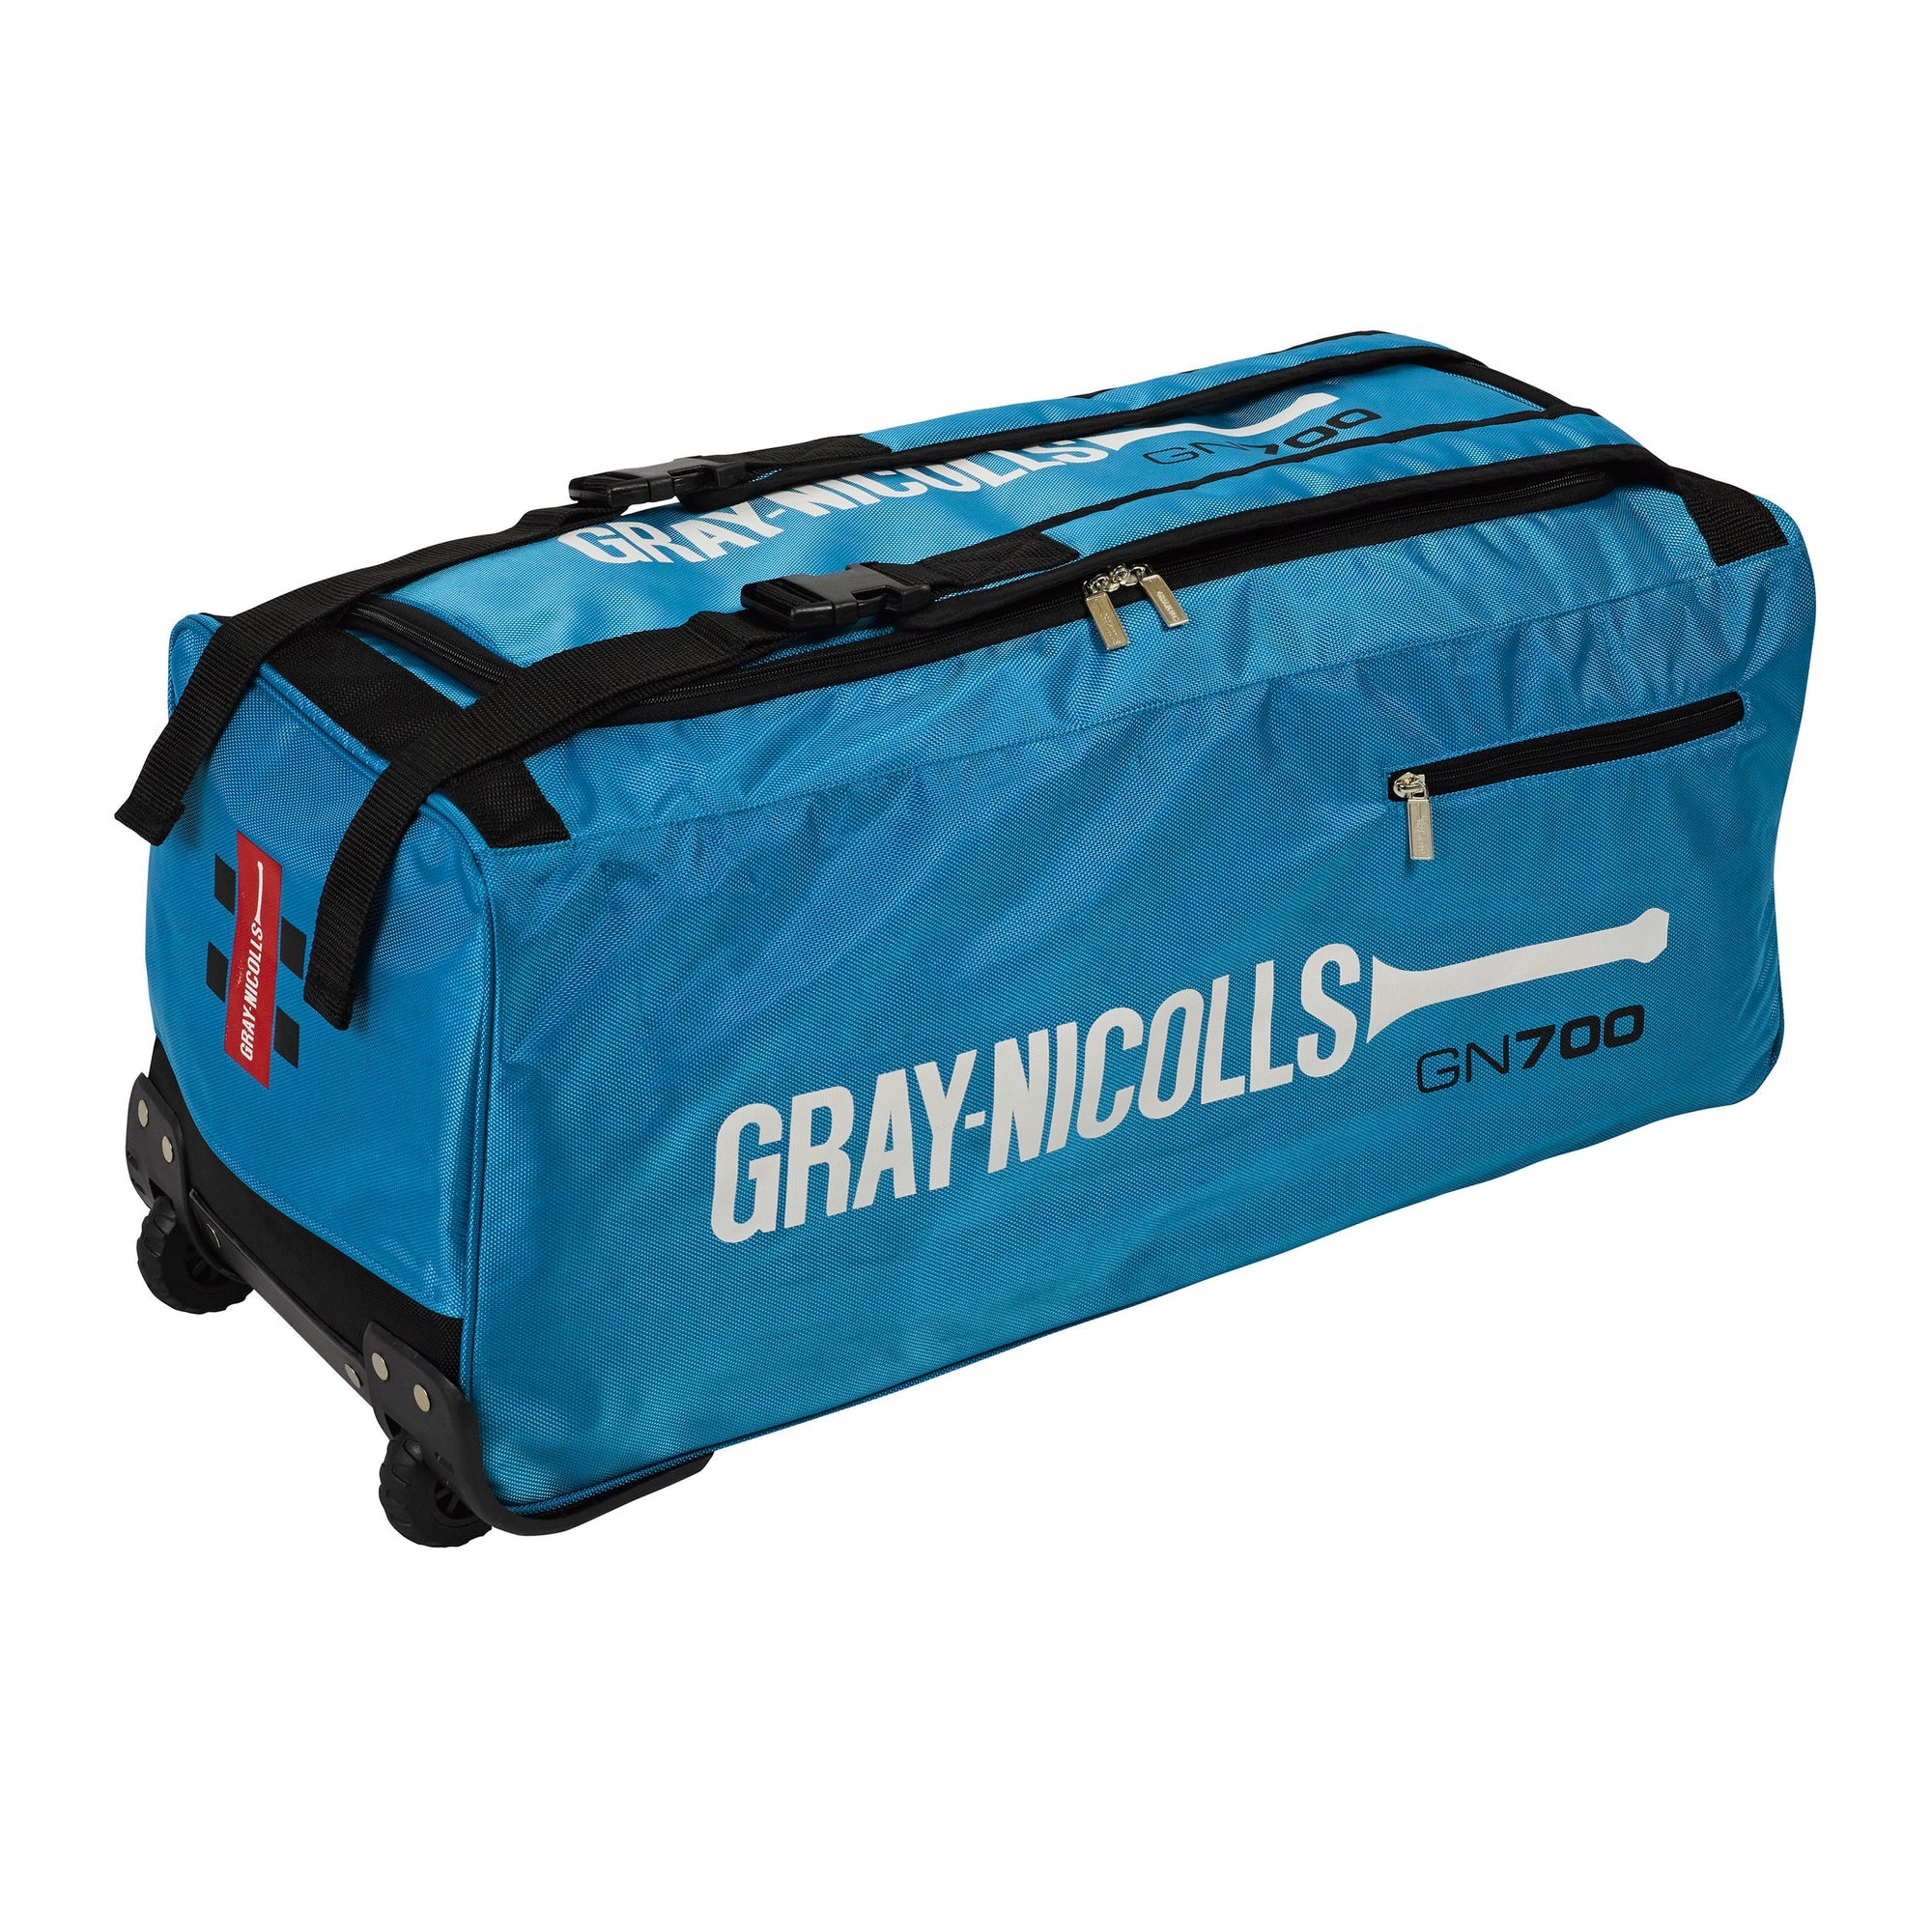 Gray-Nicolls 700 Wheel Cricket Kit Bag